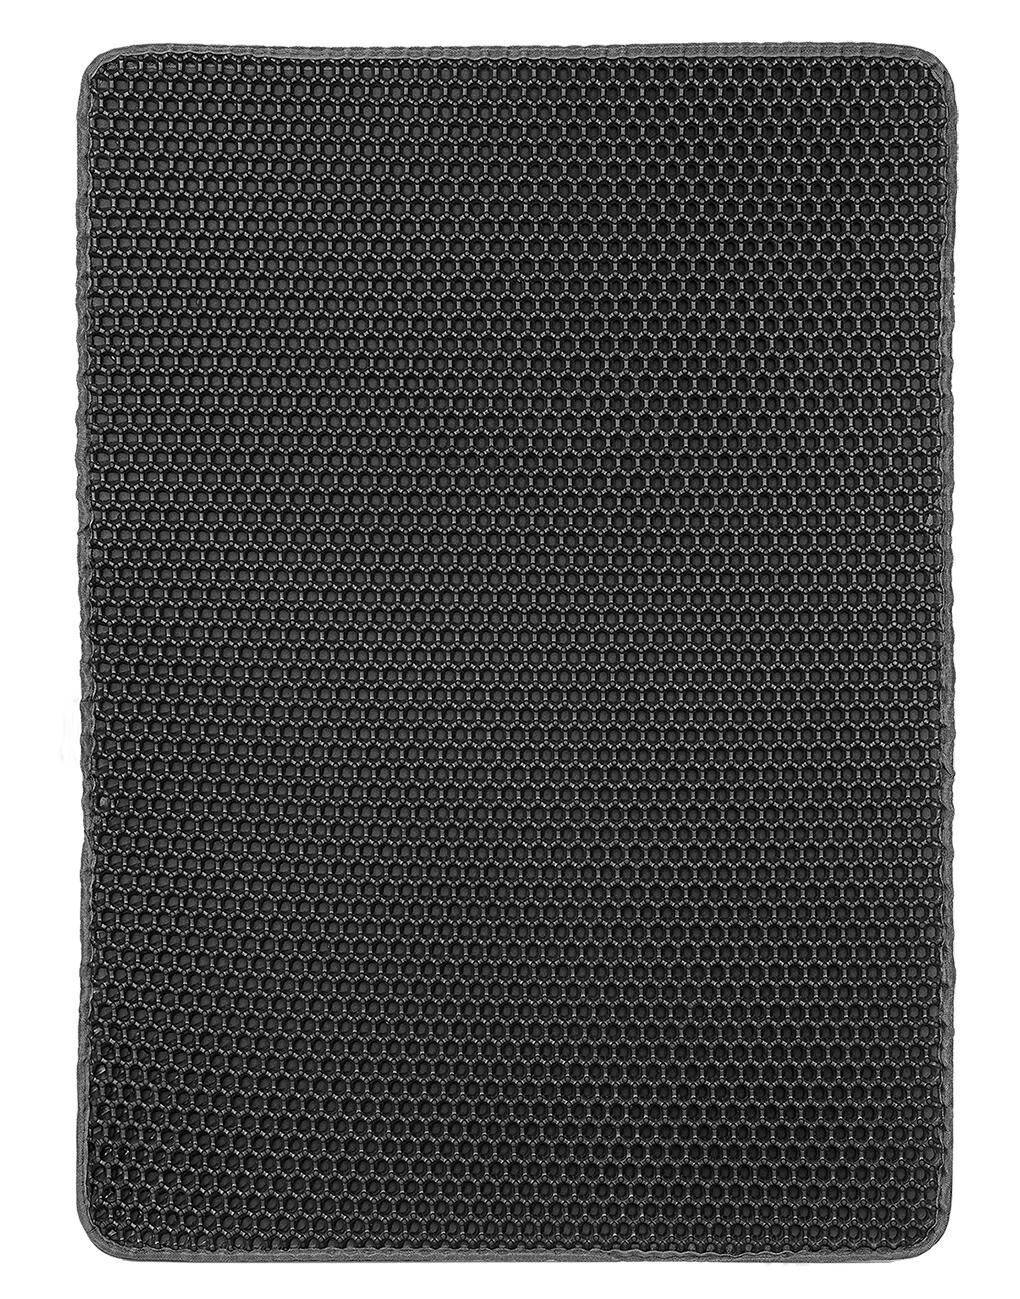 Litter mat L 55x75cm black (Photo 1)